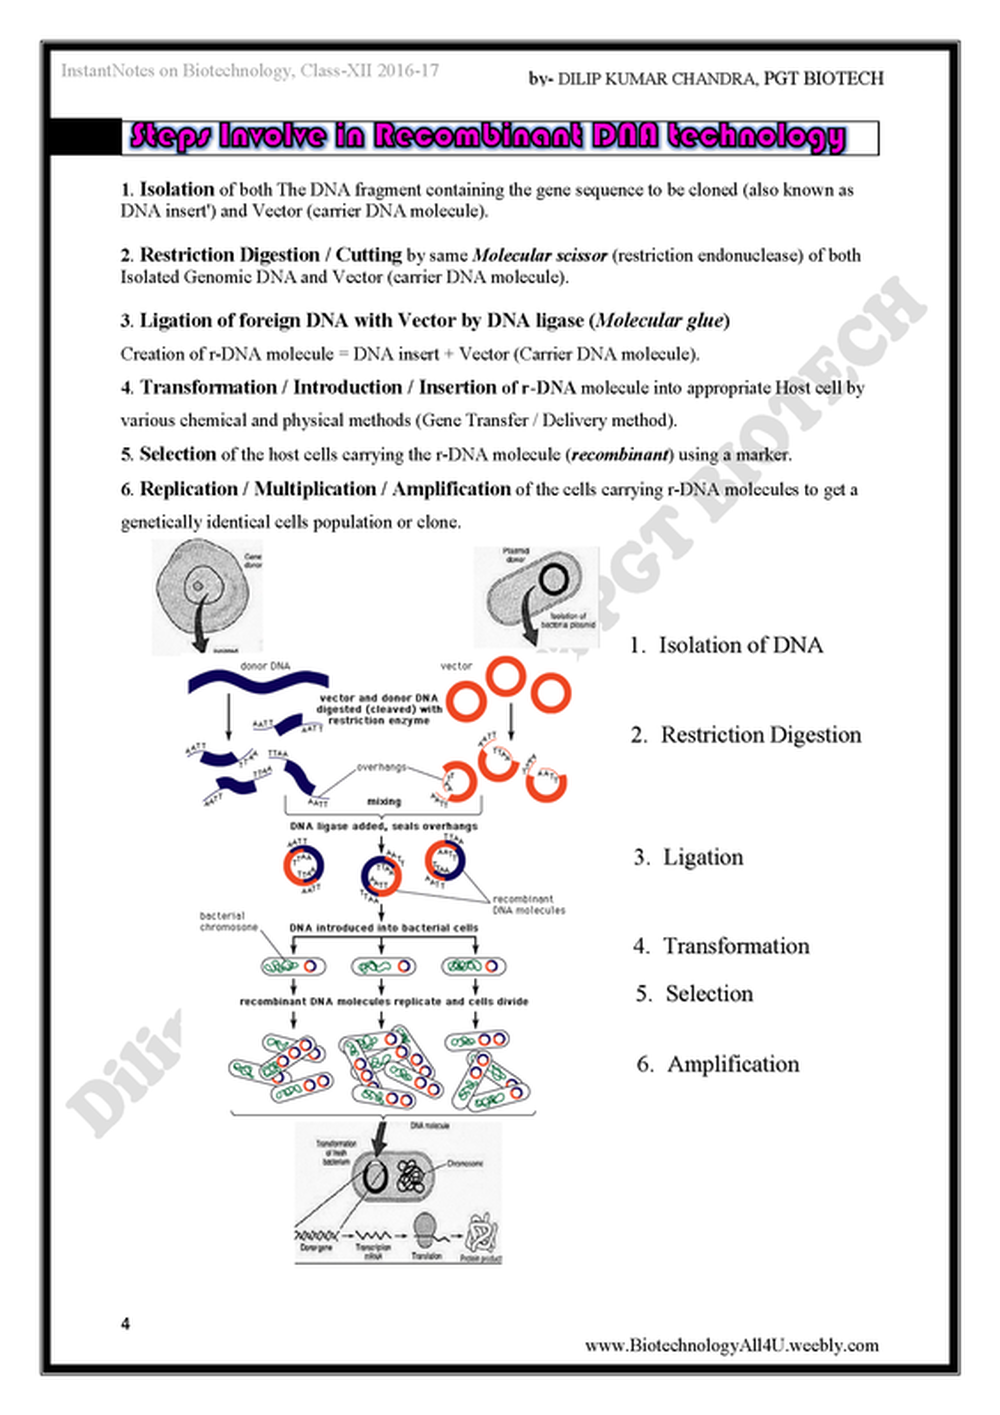 CBSE Biotechnology Notes